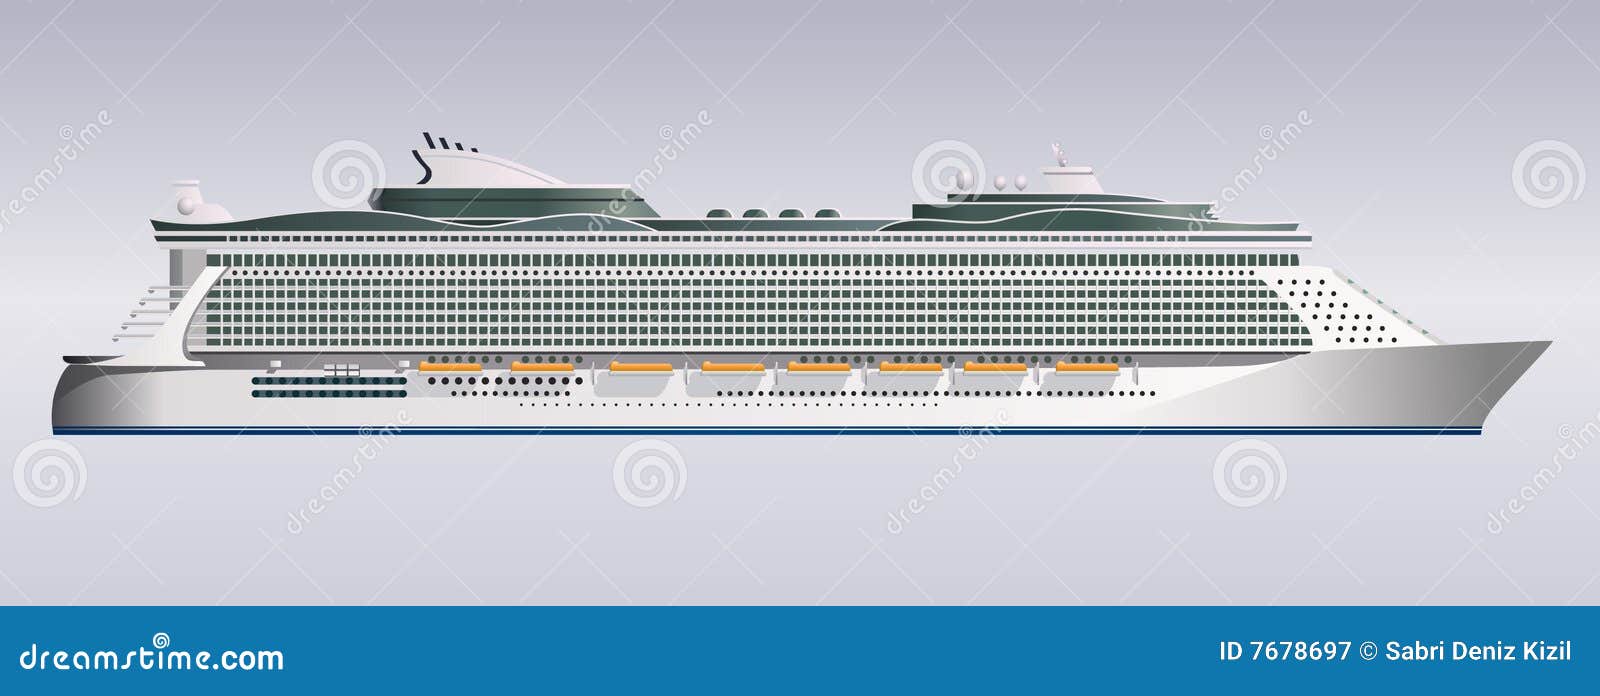 Cruise Ship Illustration Vector Royalty Free Stock ...